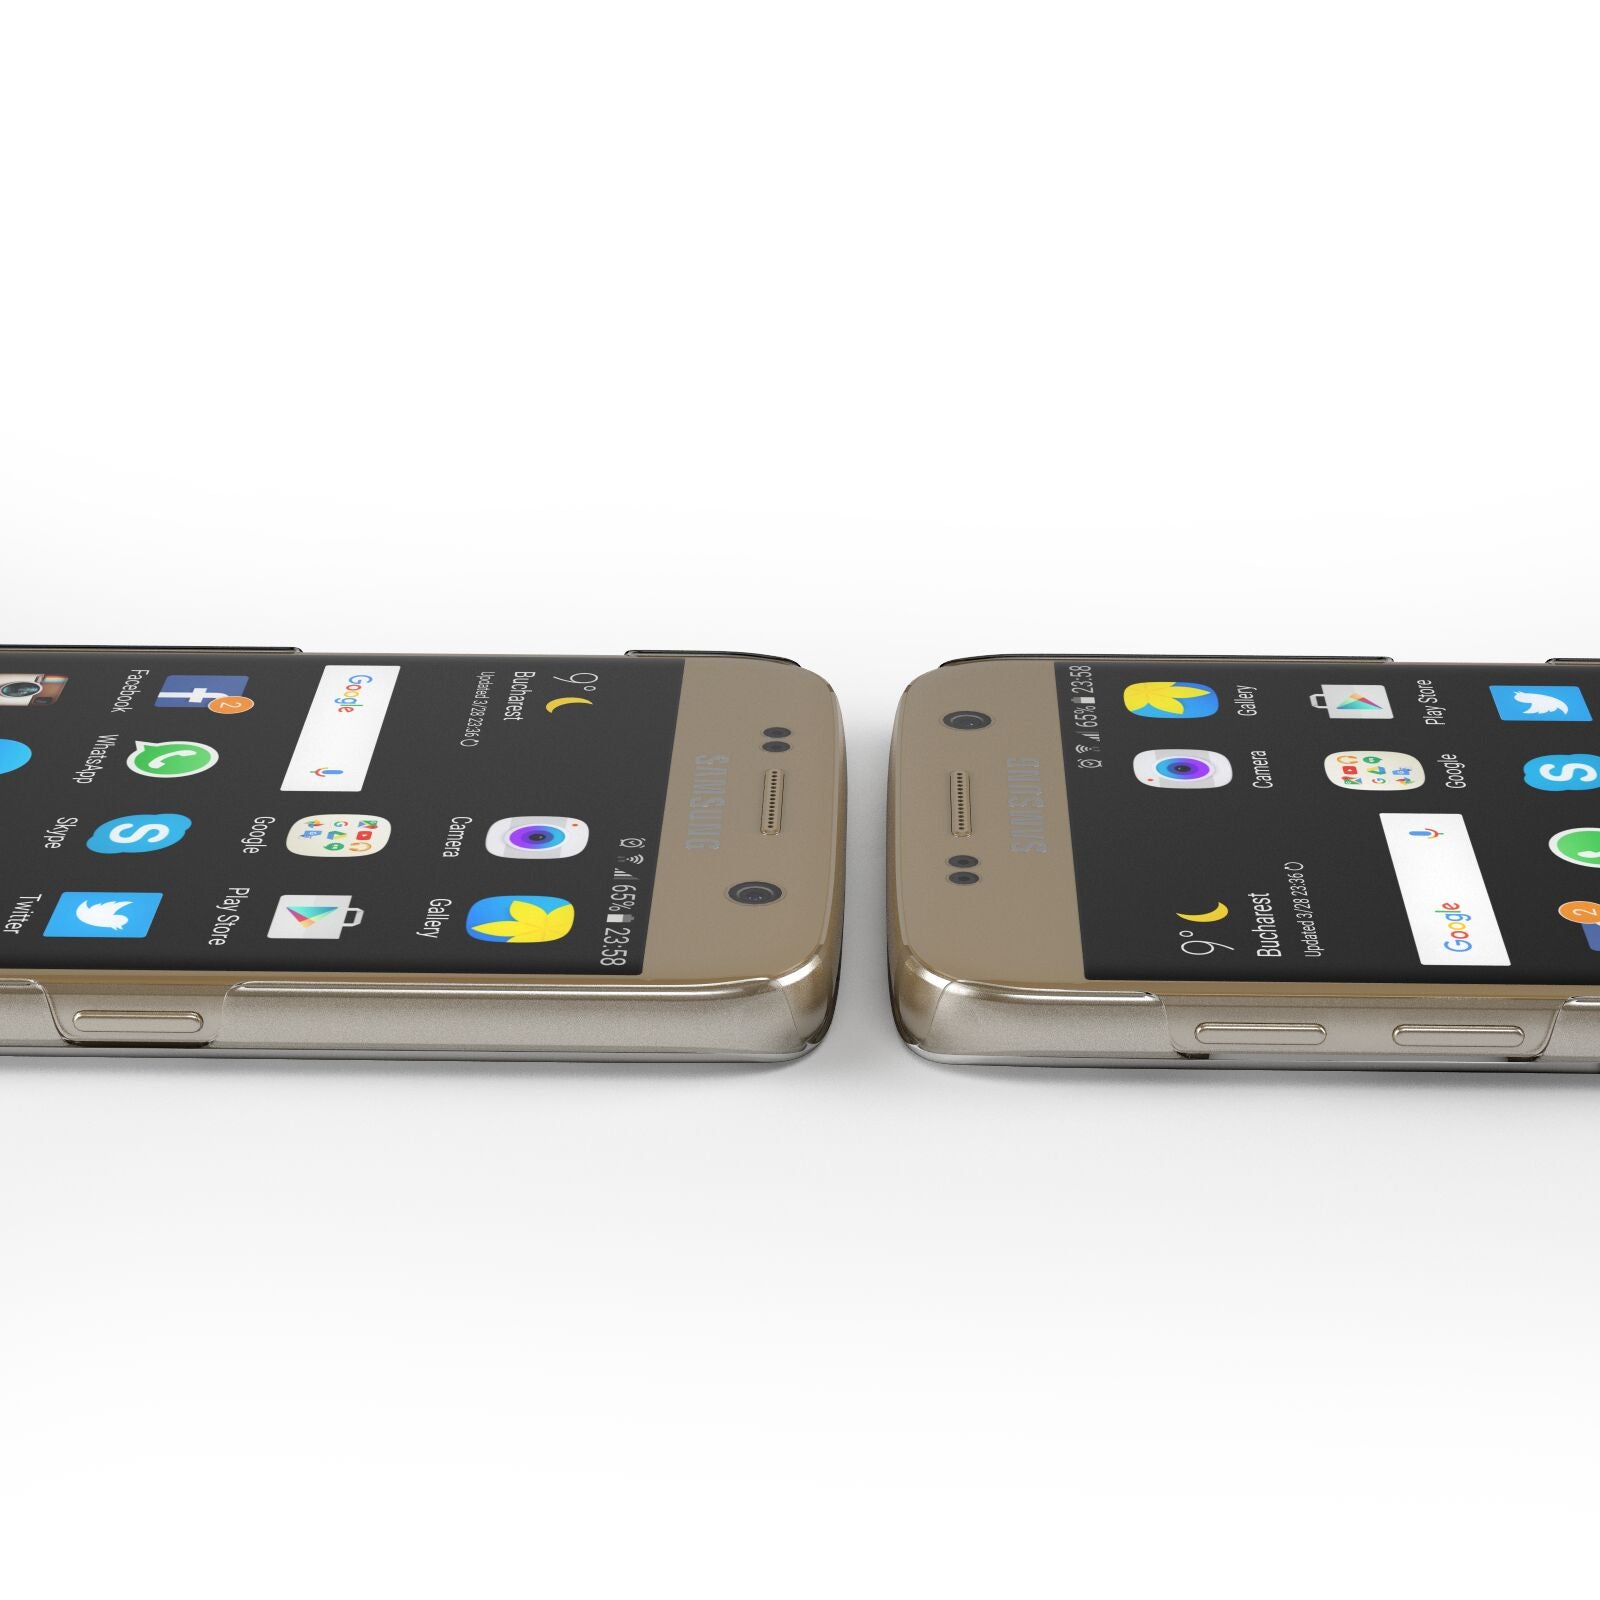 The Moon Monochrome Samsung Galaxy Case Ports Cutout